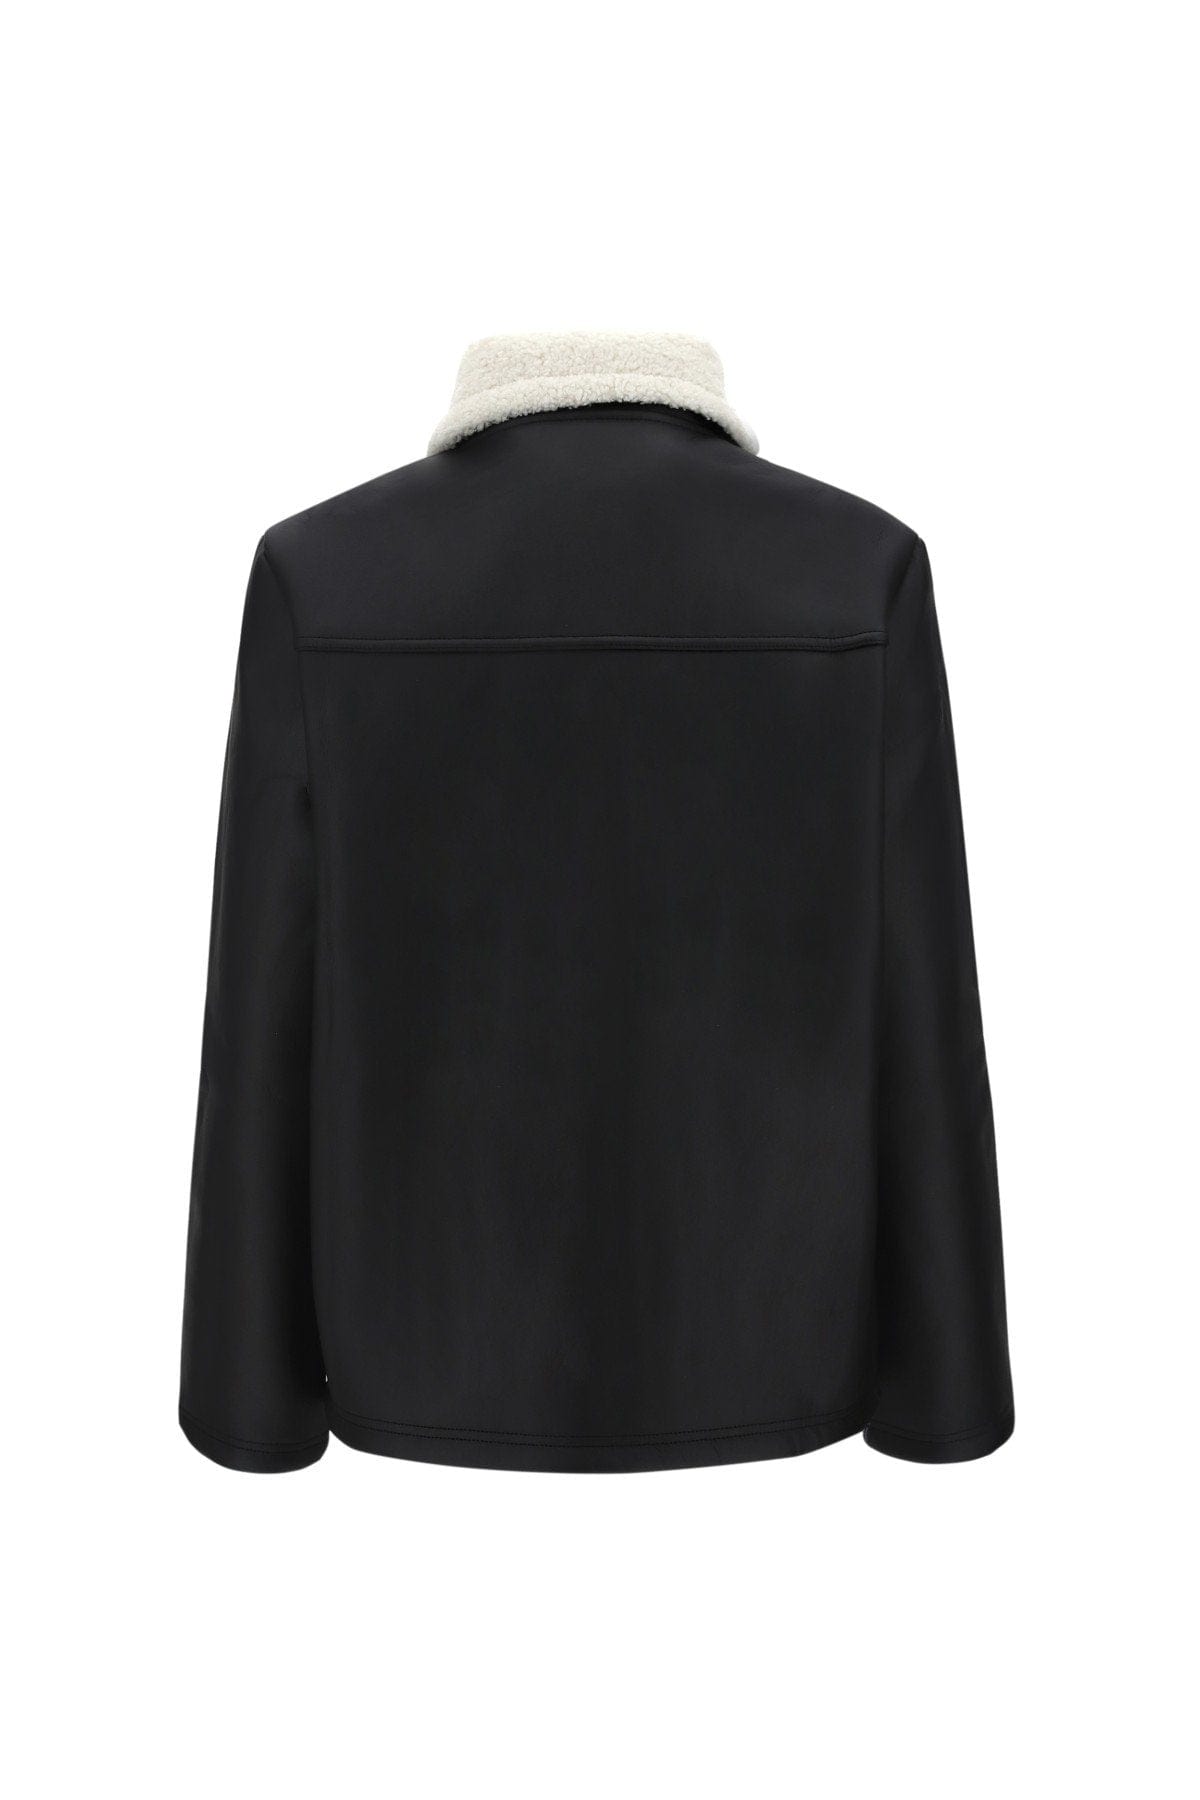 Faux Leather Teddy Jacket - Size S - Black + White 2